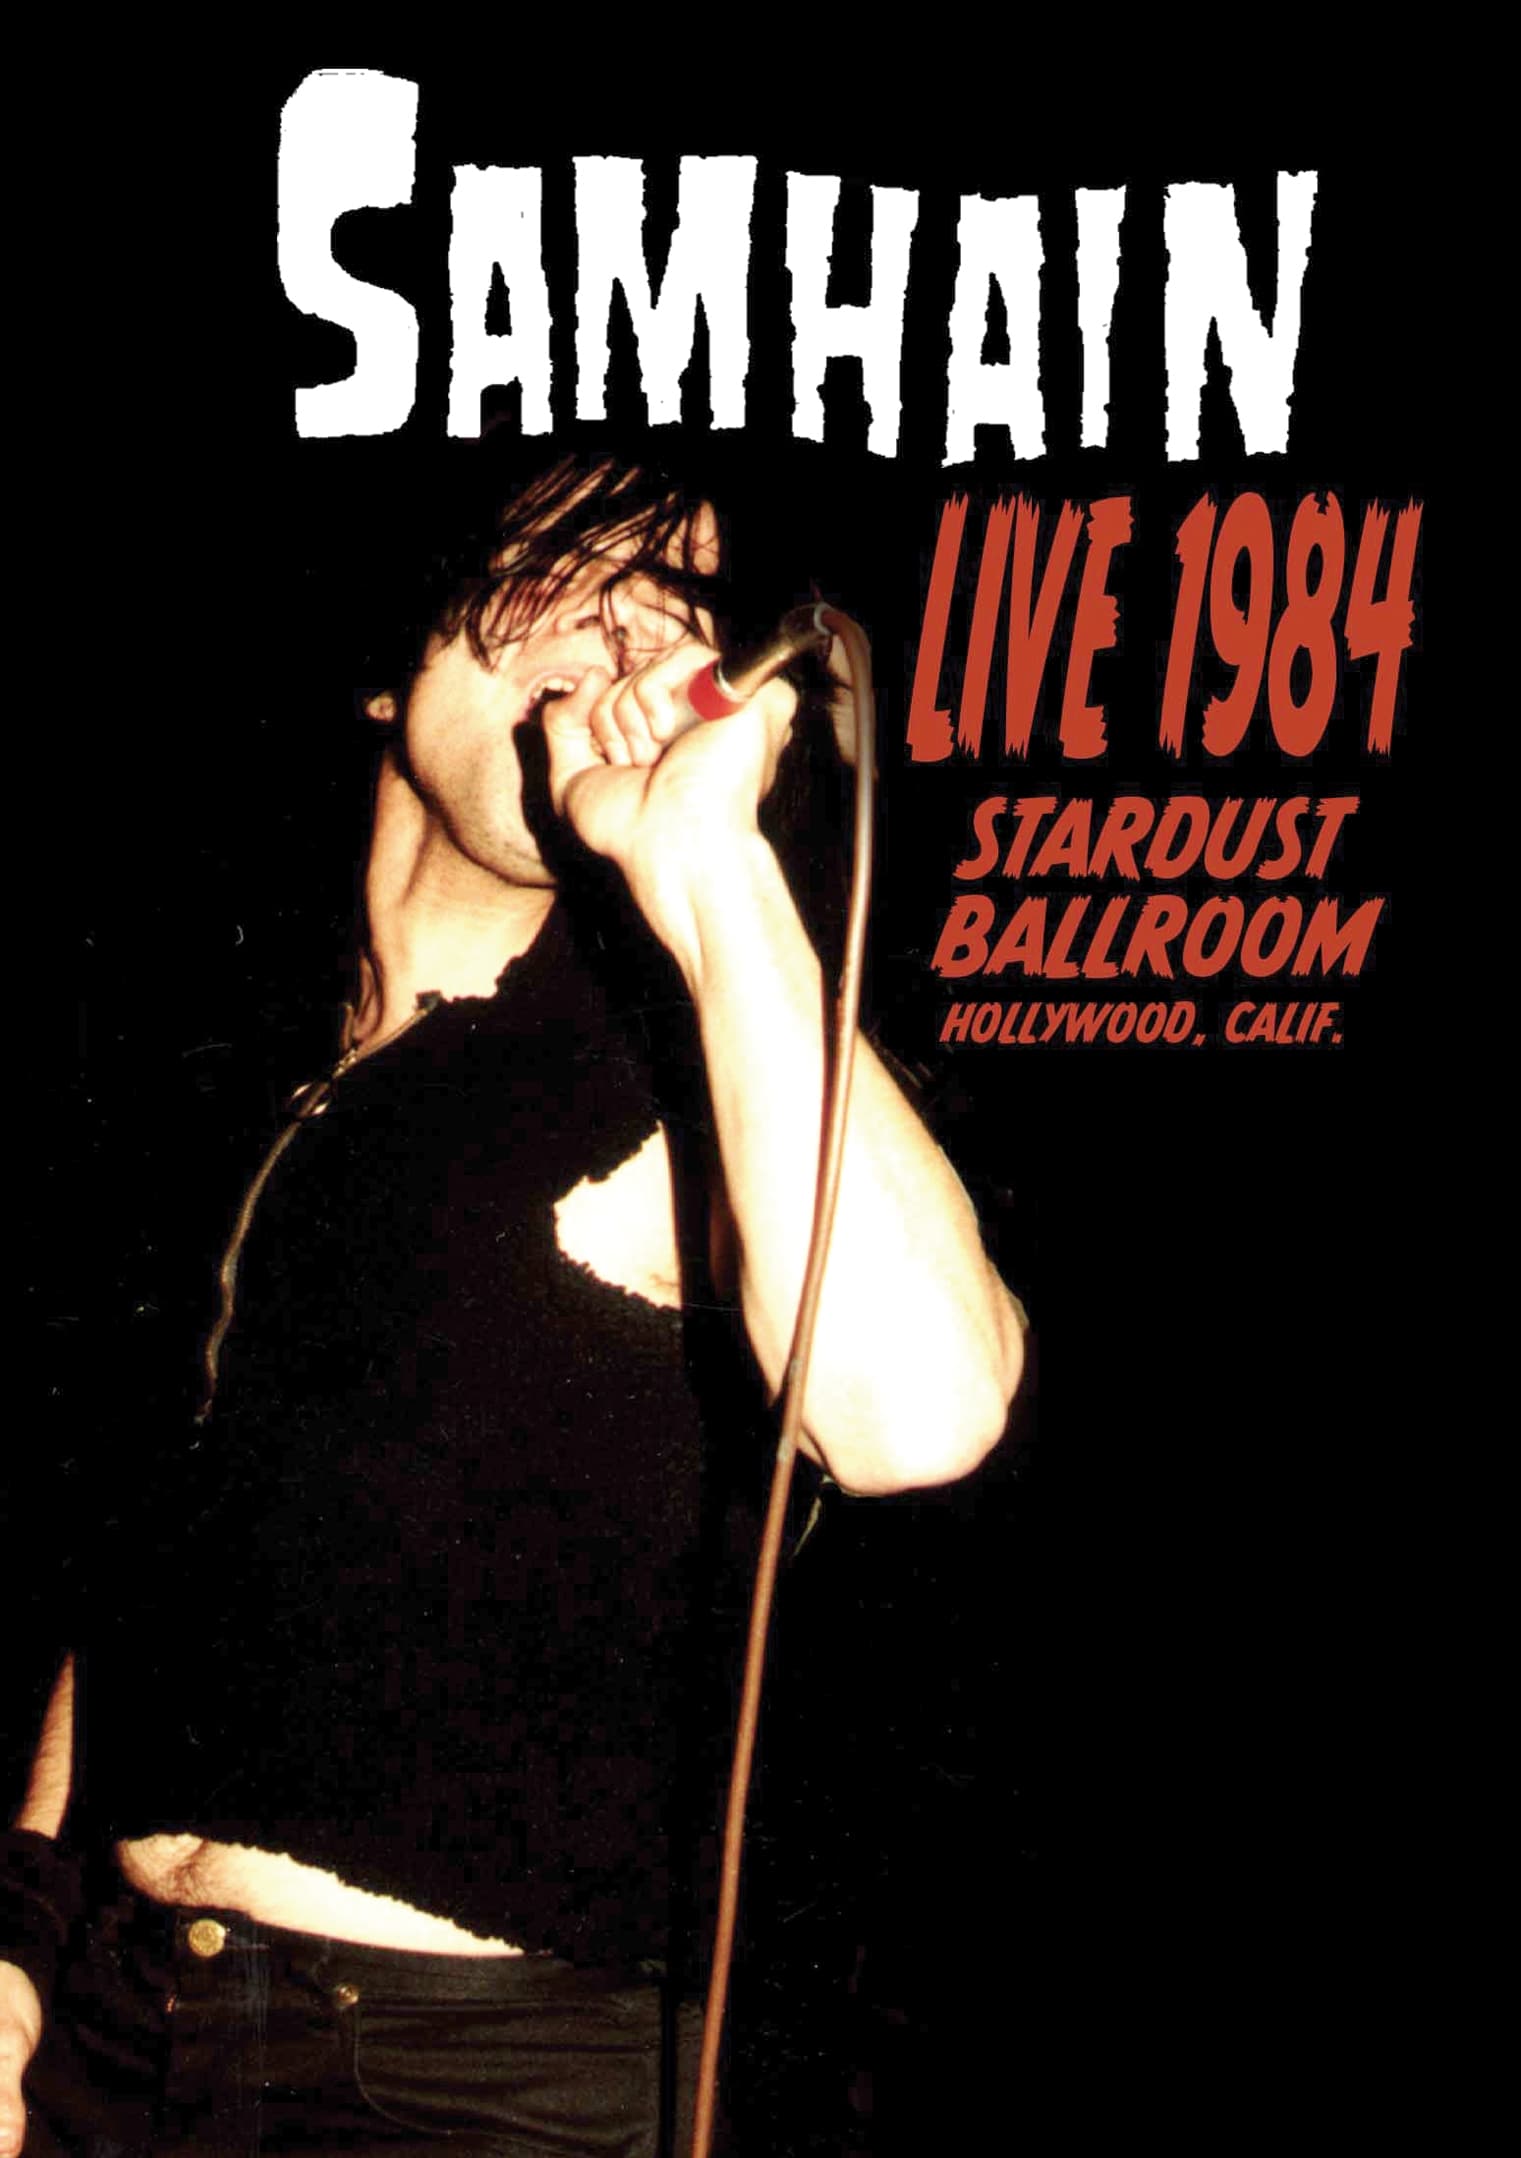 Samhain: Live 1984 at the Stardust Ballroom